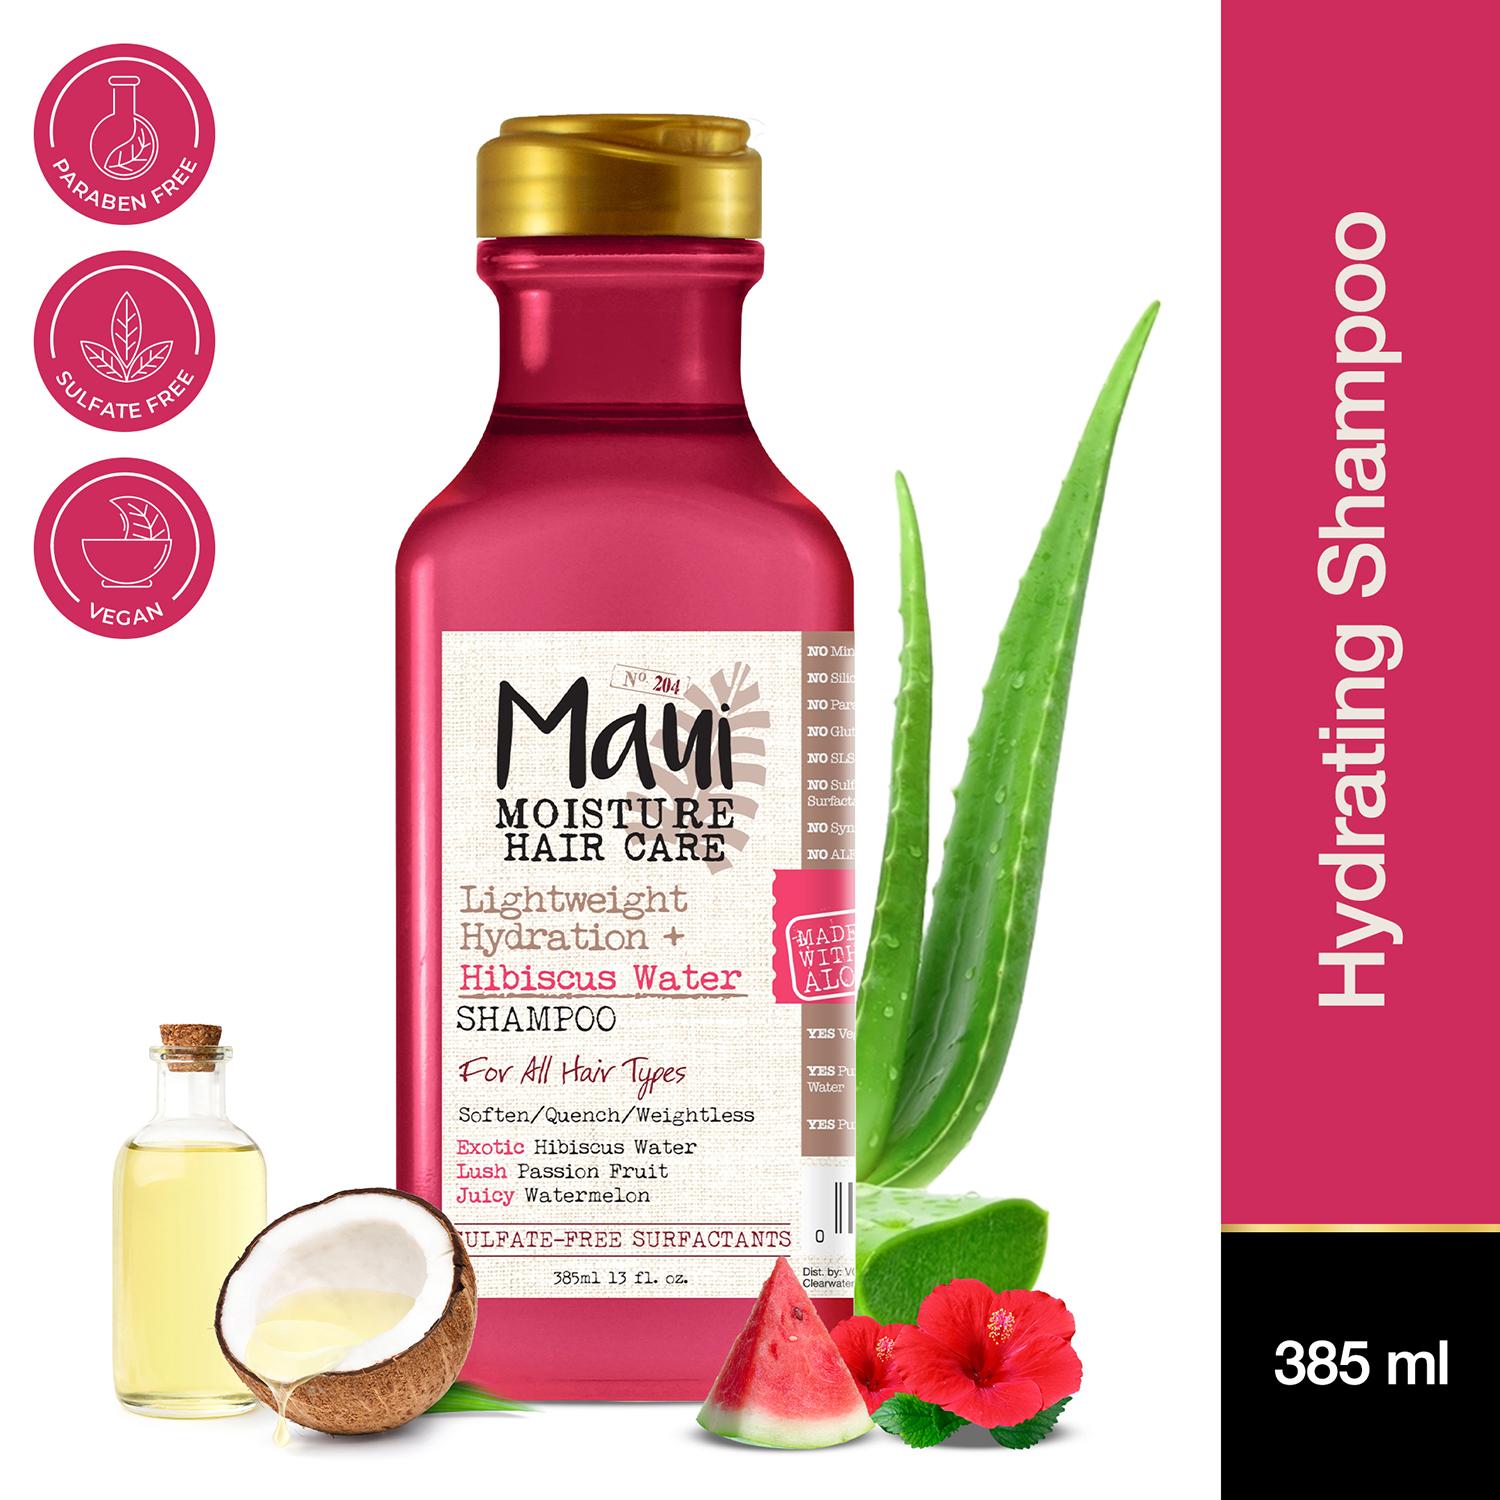 Maui Moisture Lightweight Hydration + Hibiscus Water Shampoo (385ml)